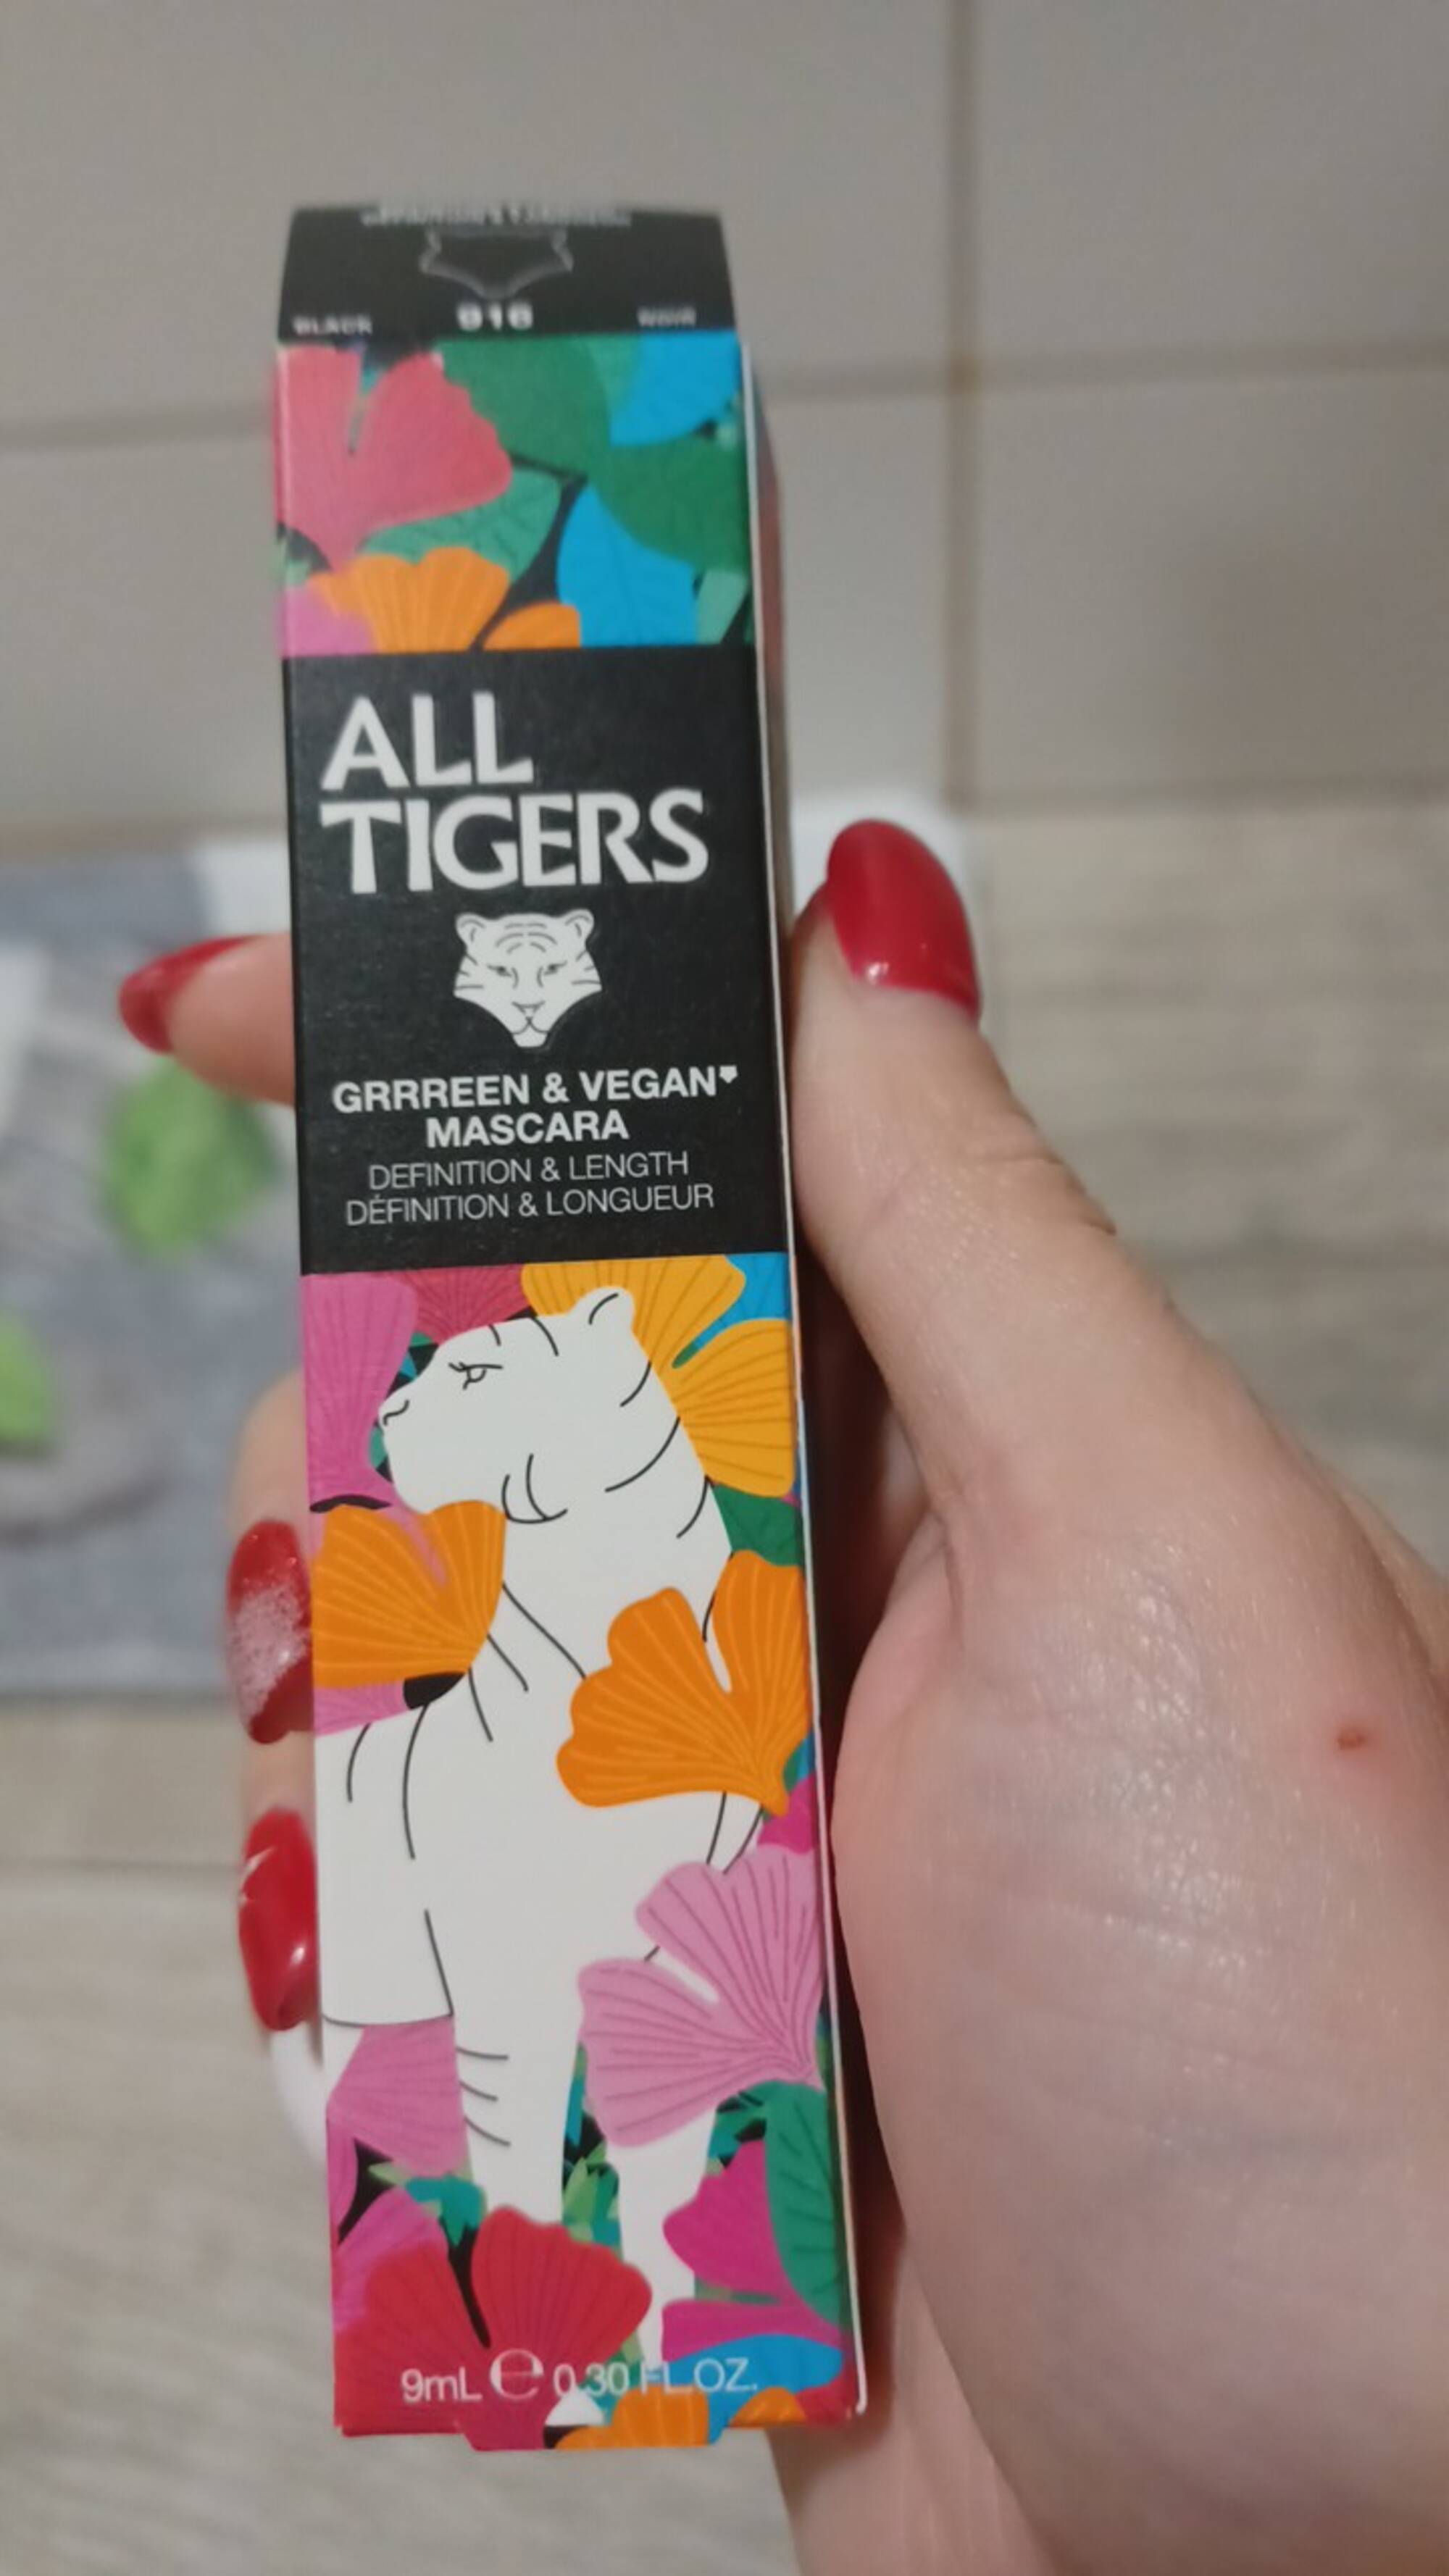 ALL TIGERS - Grrreen & vegan mascara